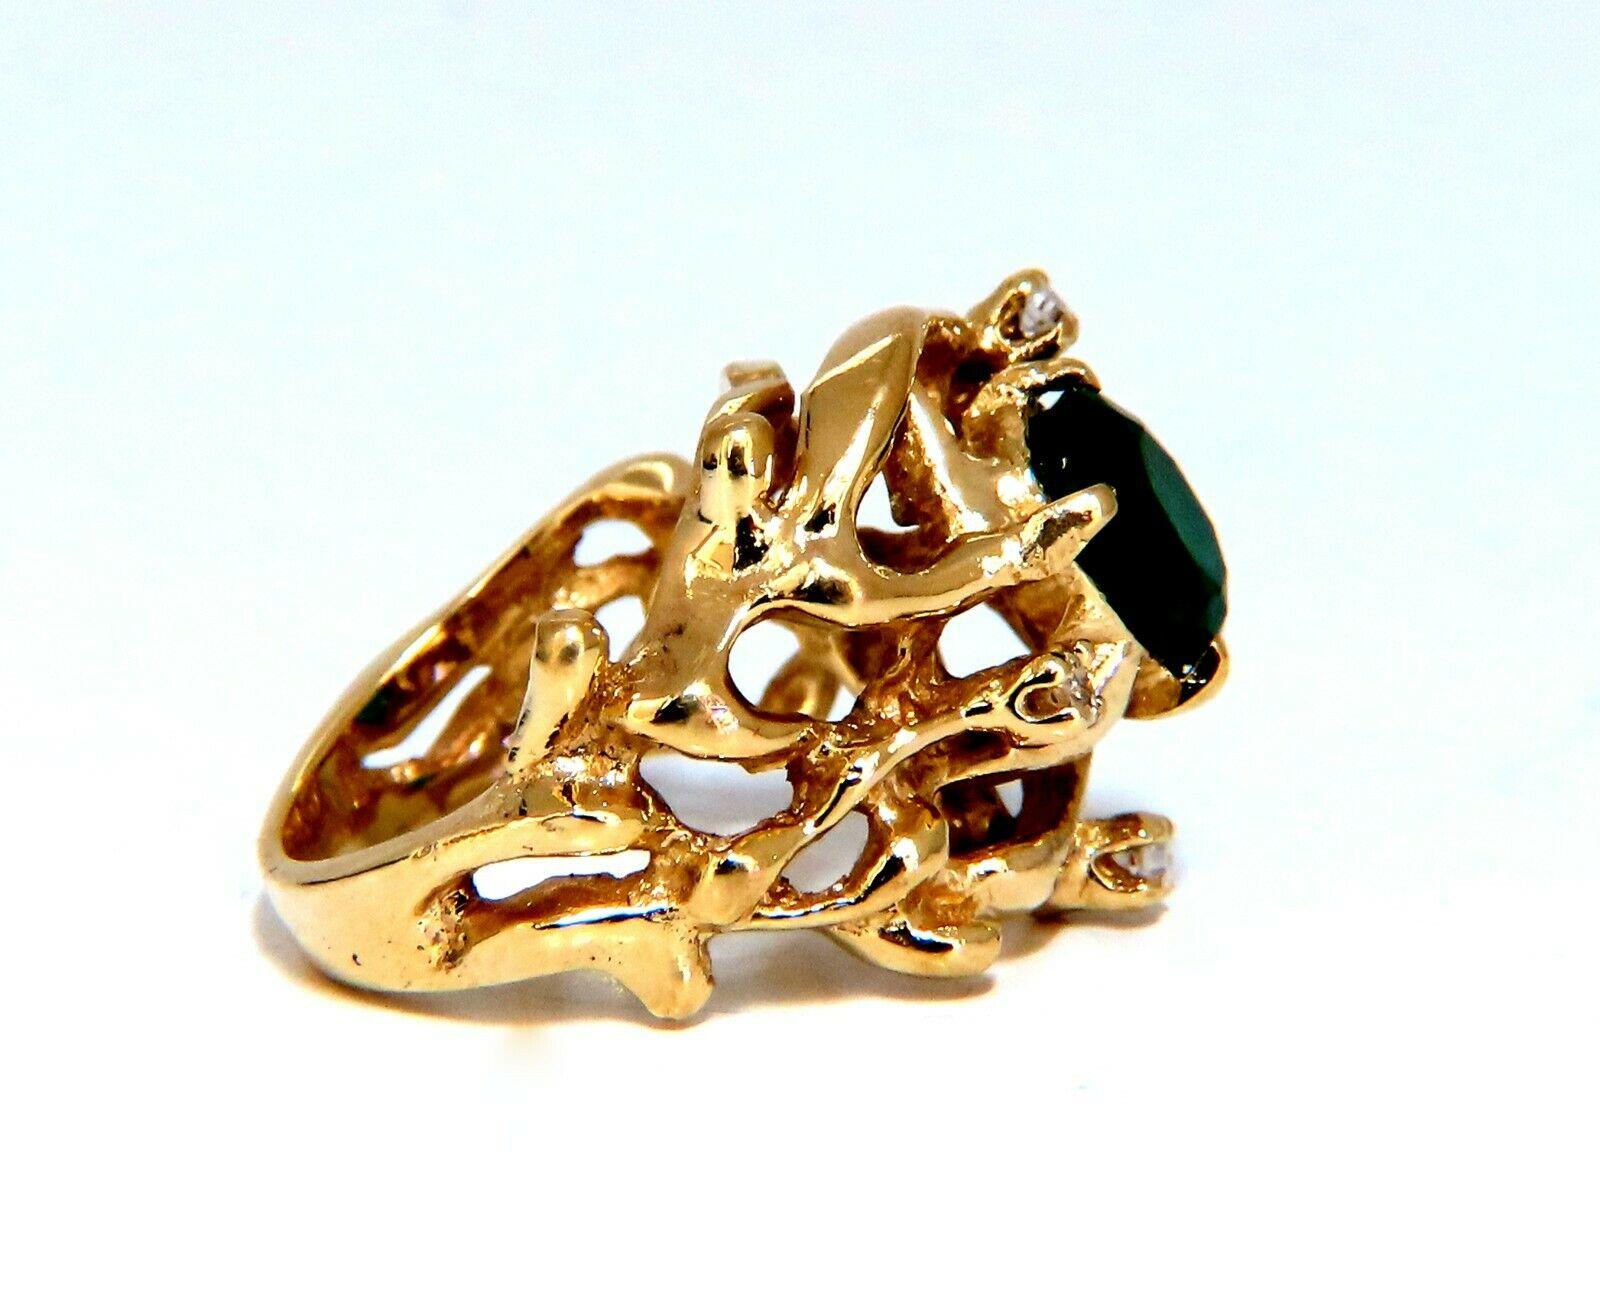 Emerald Cut 1.42ct Natural Vivid Green Emerald Diamonds Nugget Vine Ring 14kt For Sale